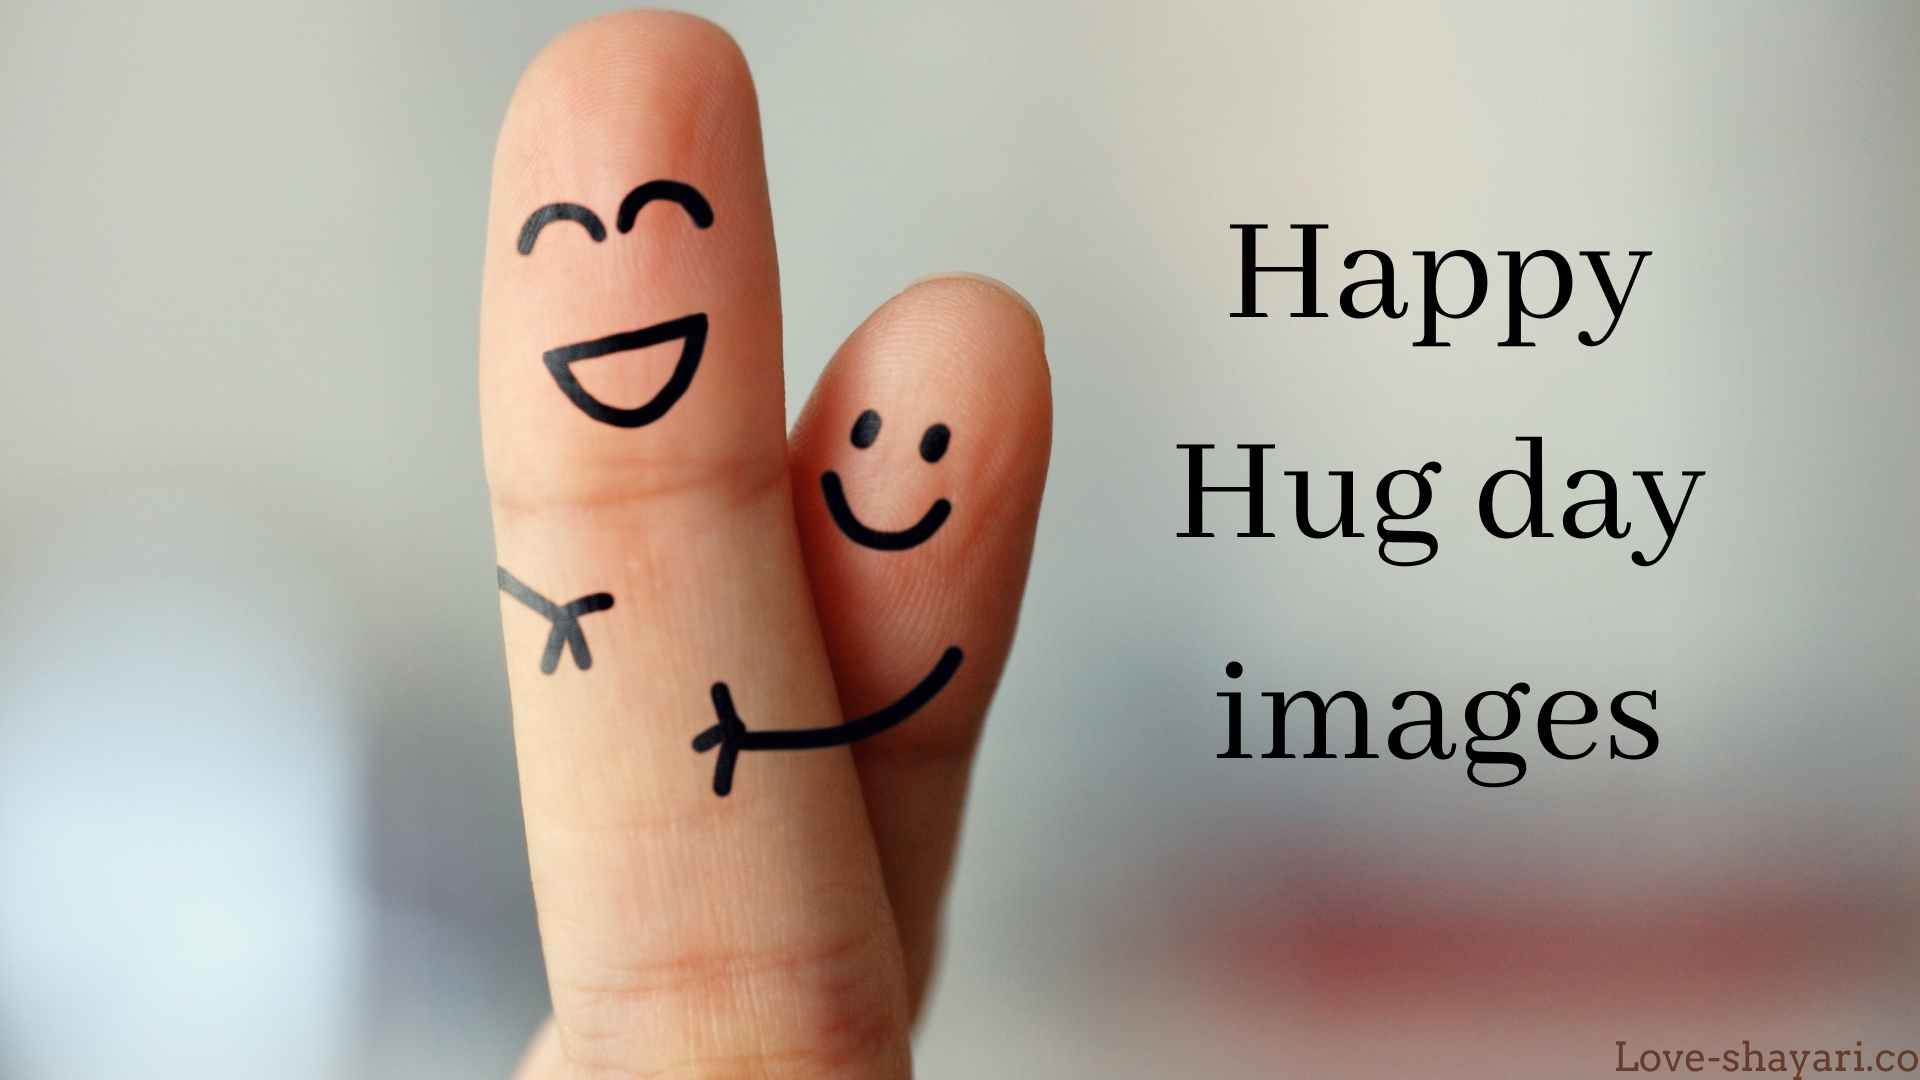 Happy Hug day images